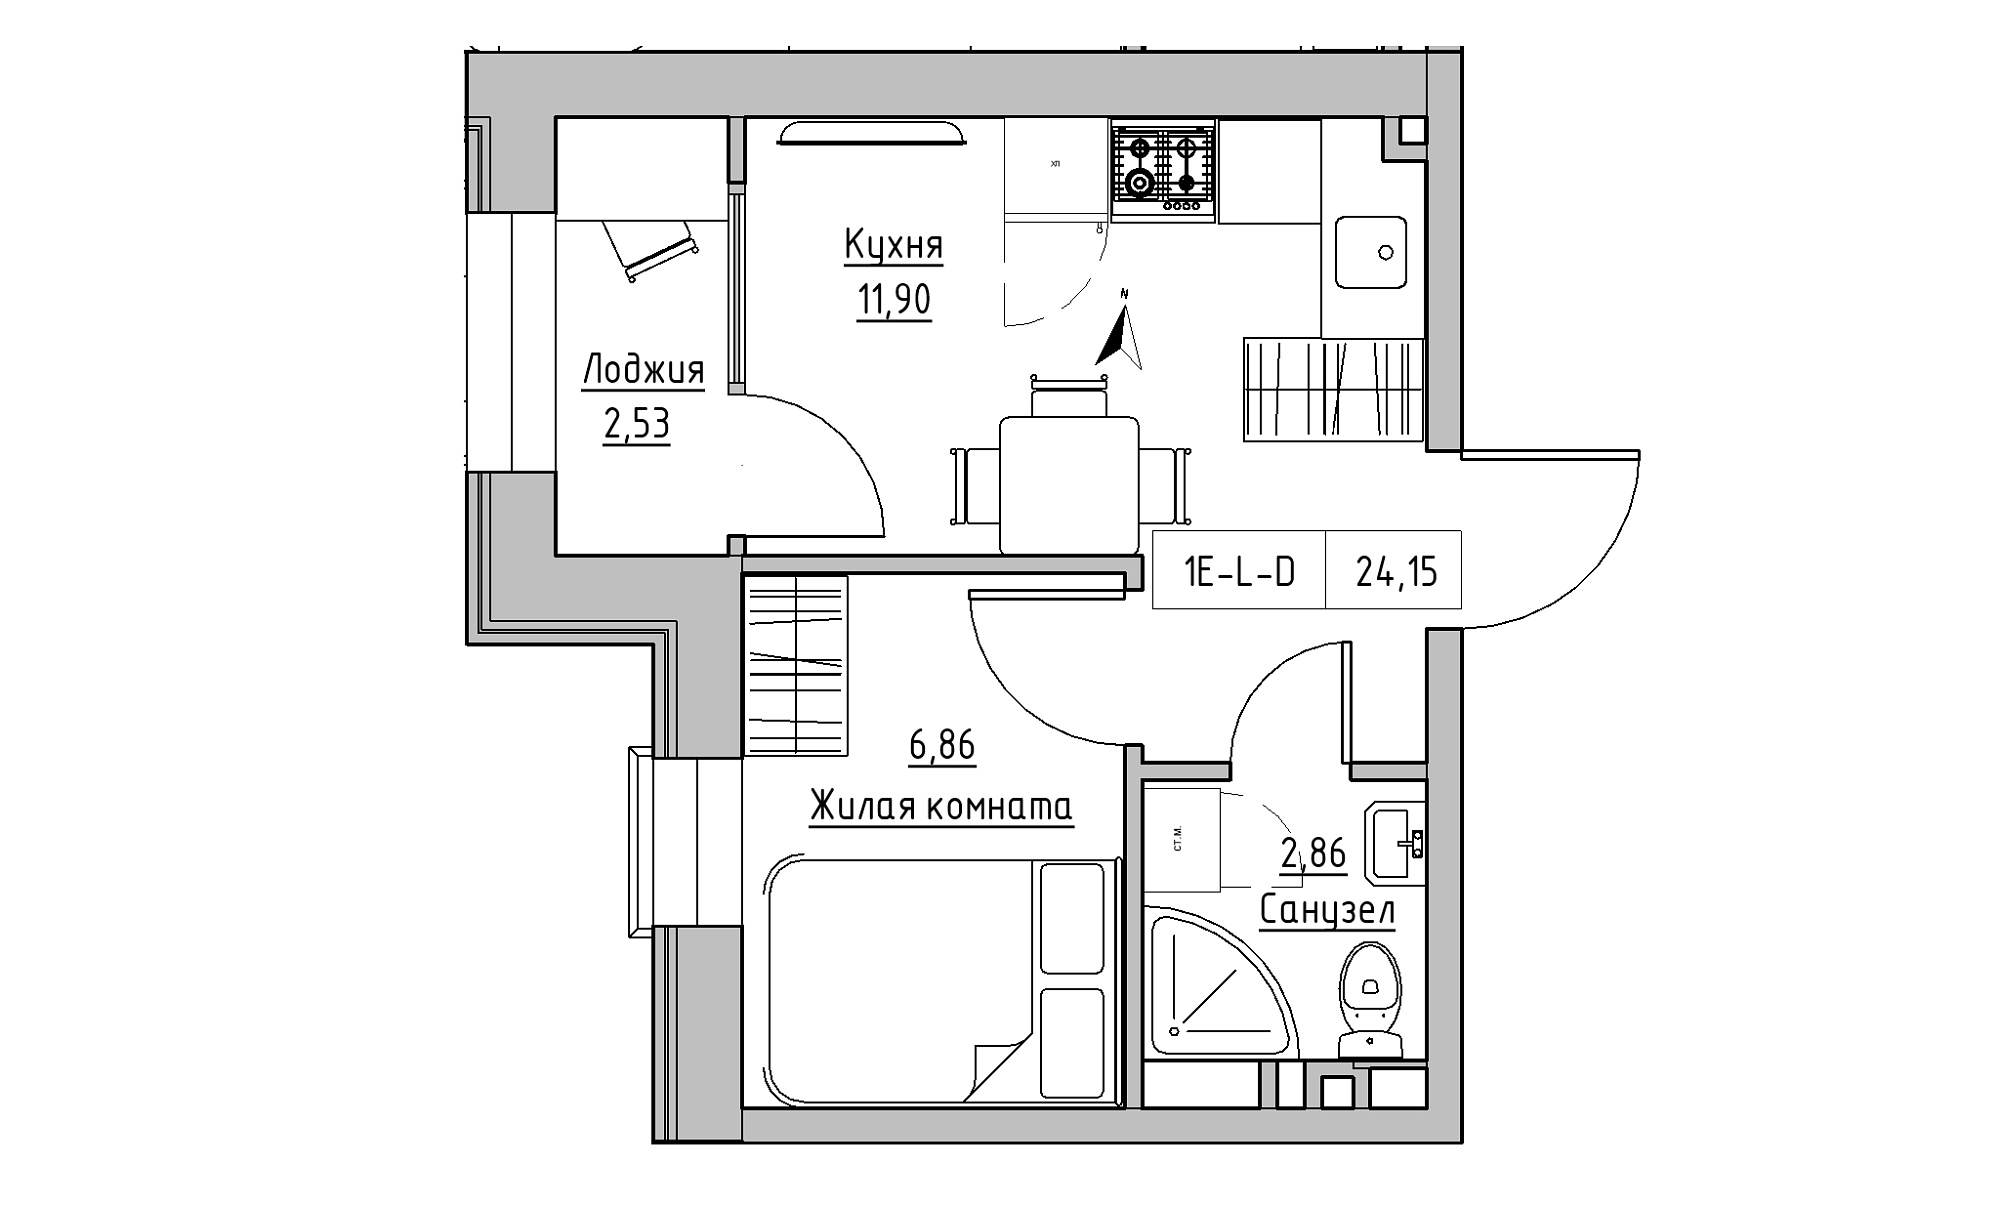 Planning 1-rm flats area 24.15m2, KS-023-03/0001.